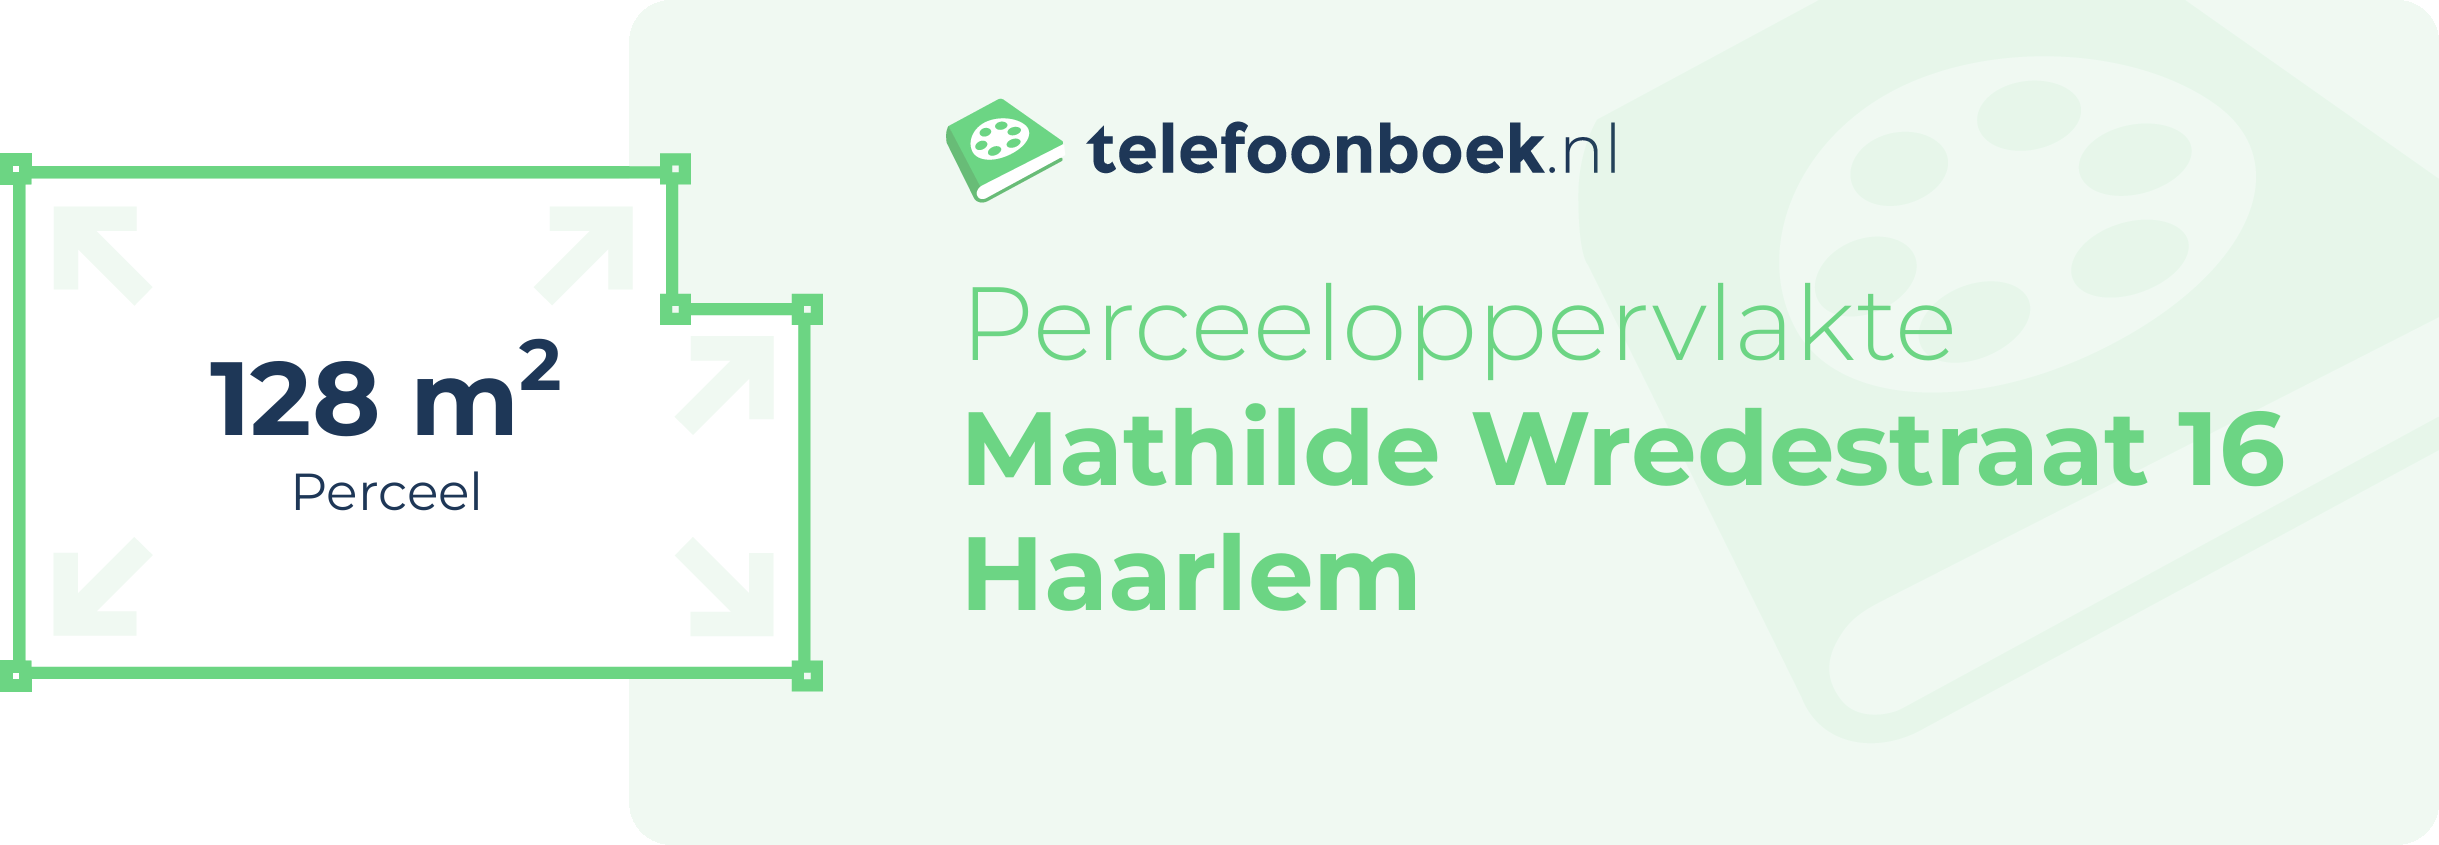 Perceeloppervlakte Mathilde Wredestraat 16 Haarlem